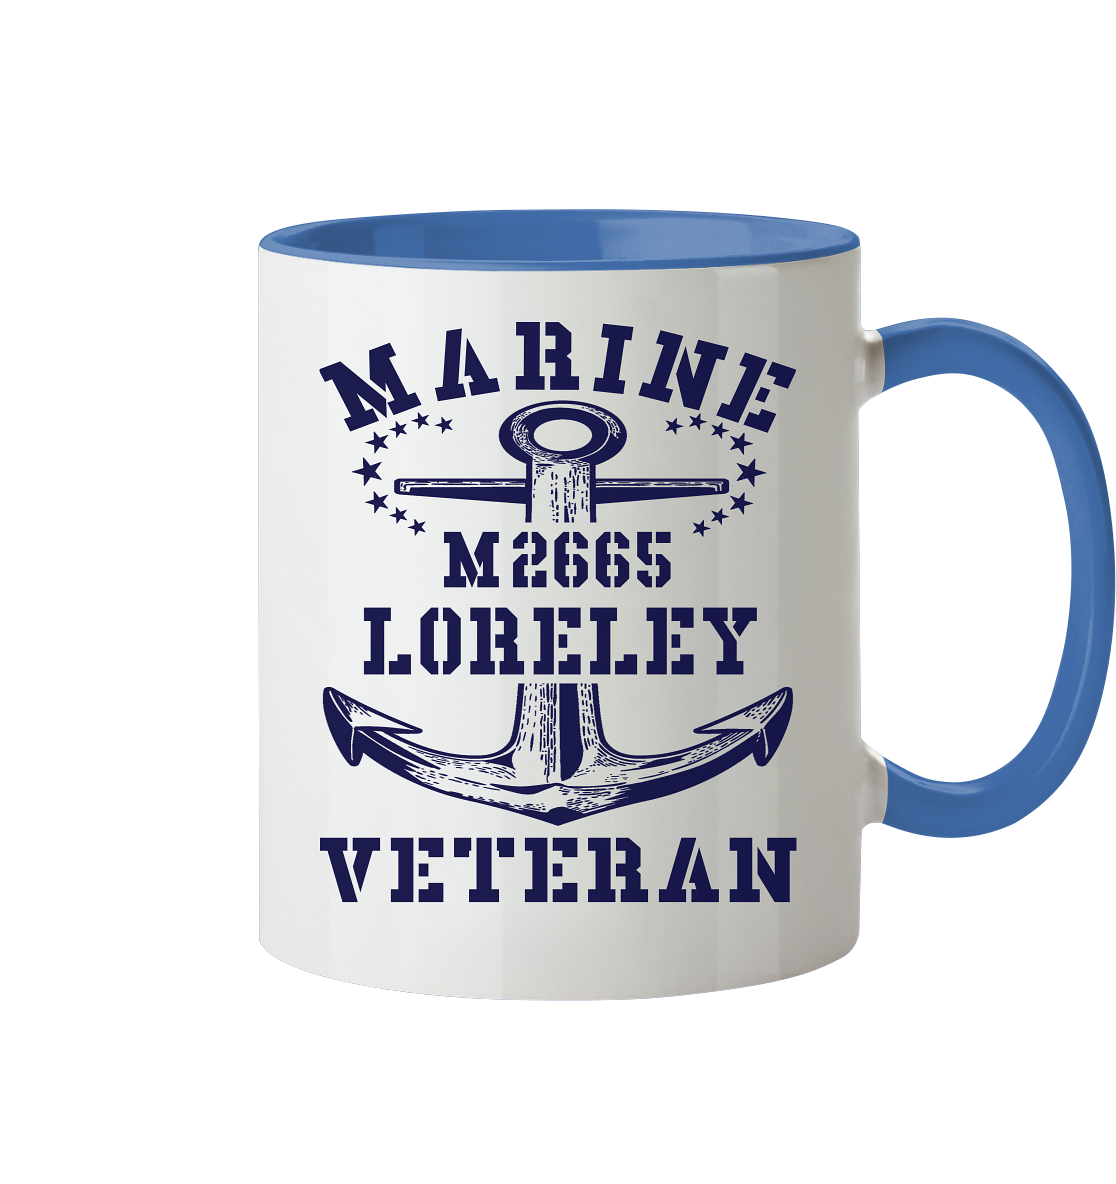 BiMi M2665 LORELEY Marine Veteran - Tasse zweifarbig